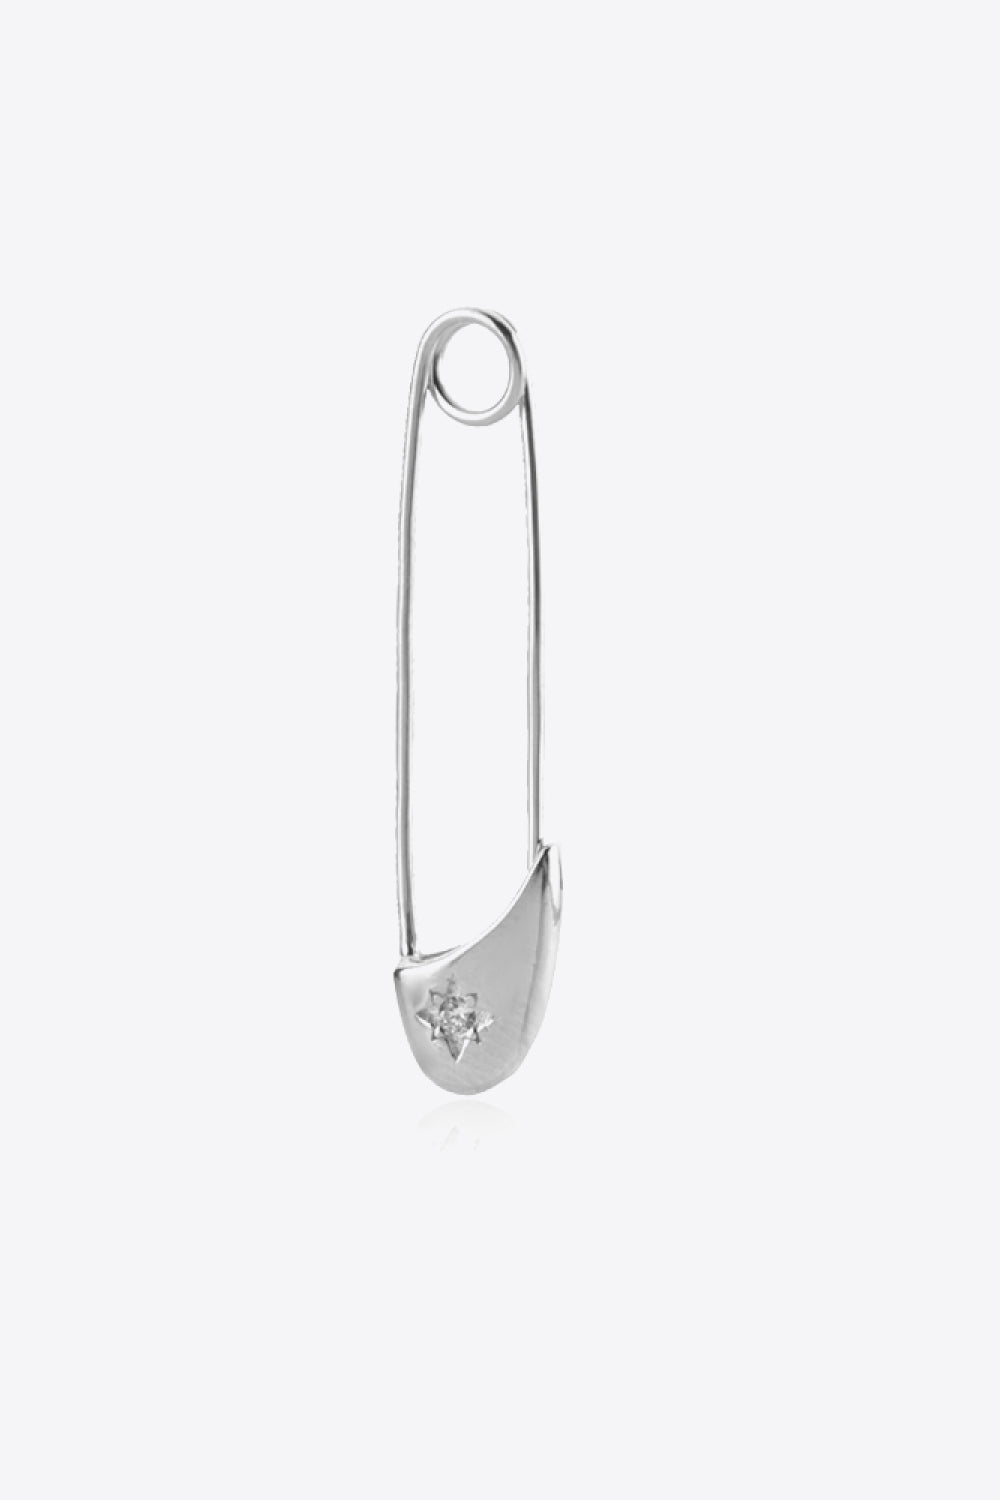 Inlaid Zircon Single Pin Earring - Earrings - FITGGINS